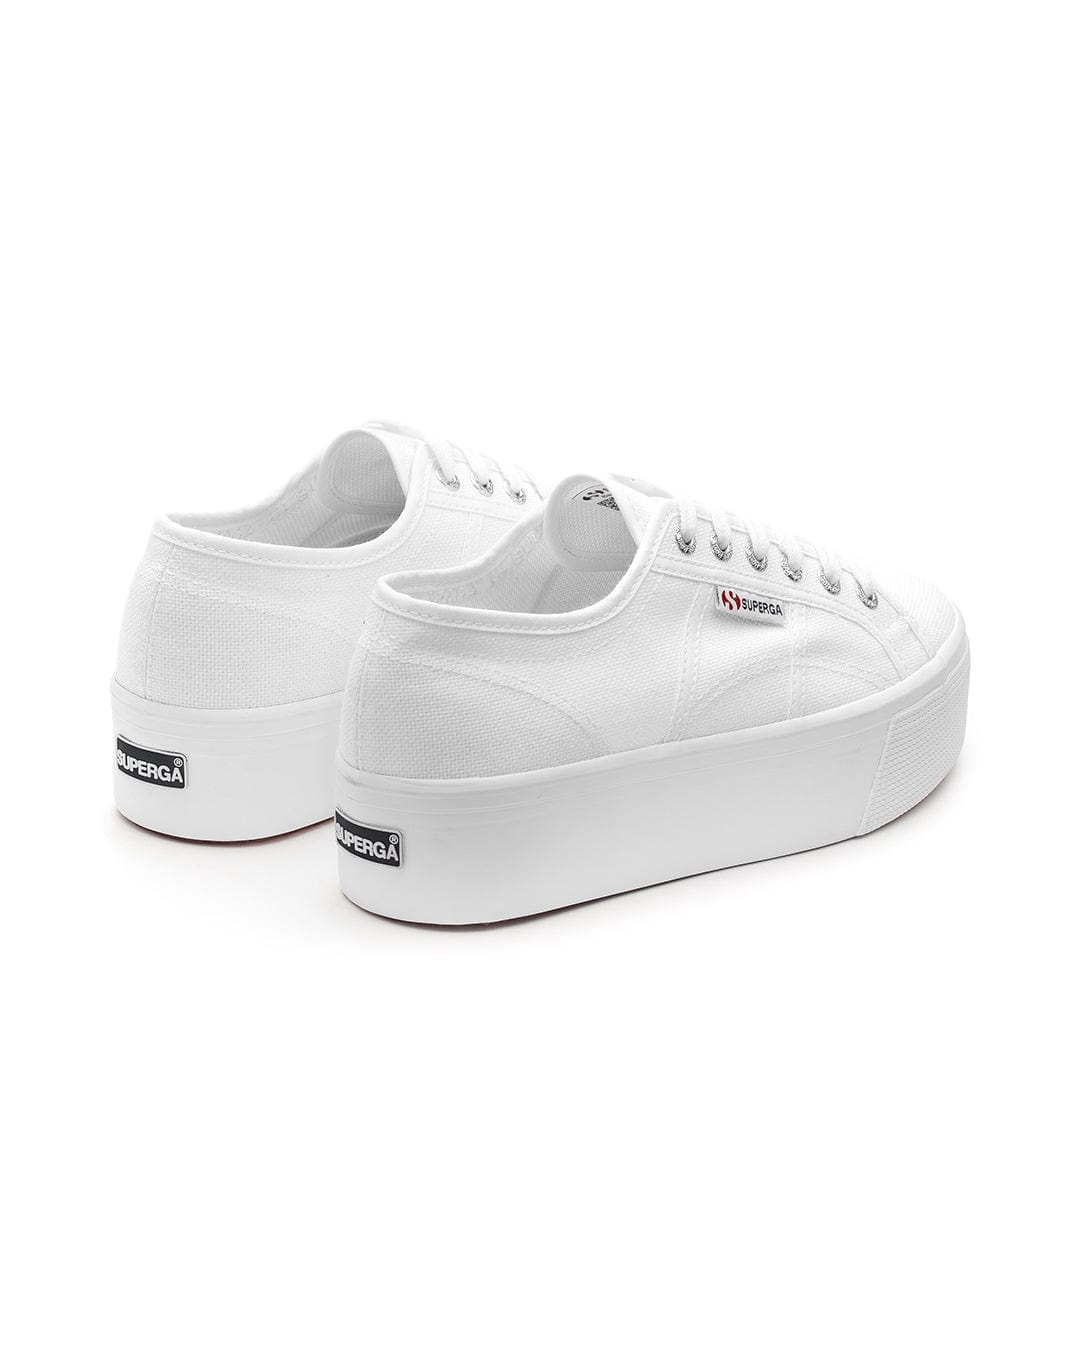 Superga Shoes 2790 PLATFORM 901 White